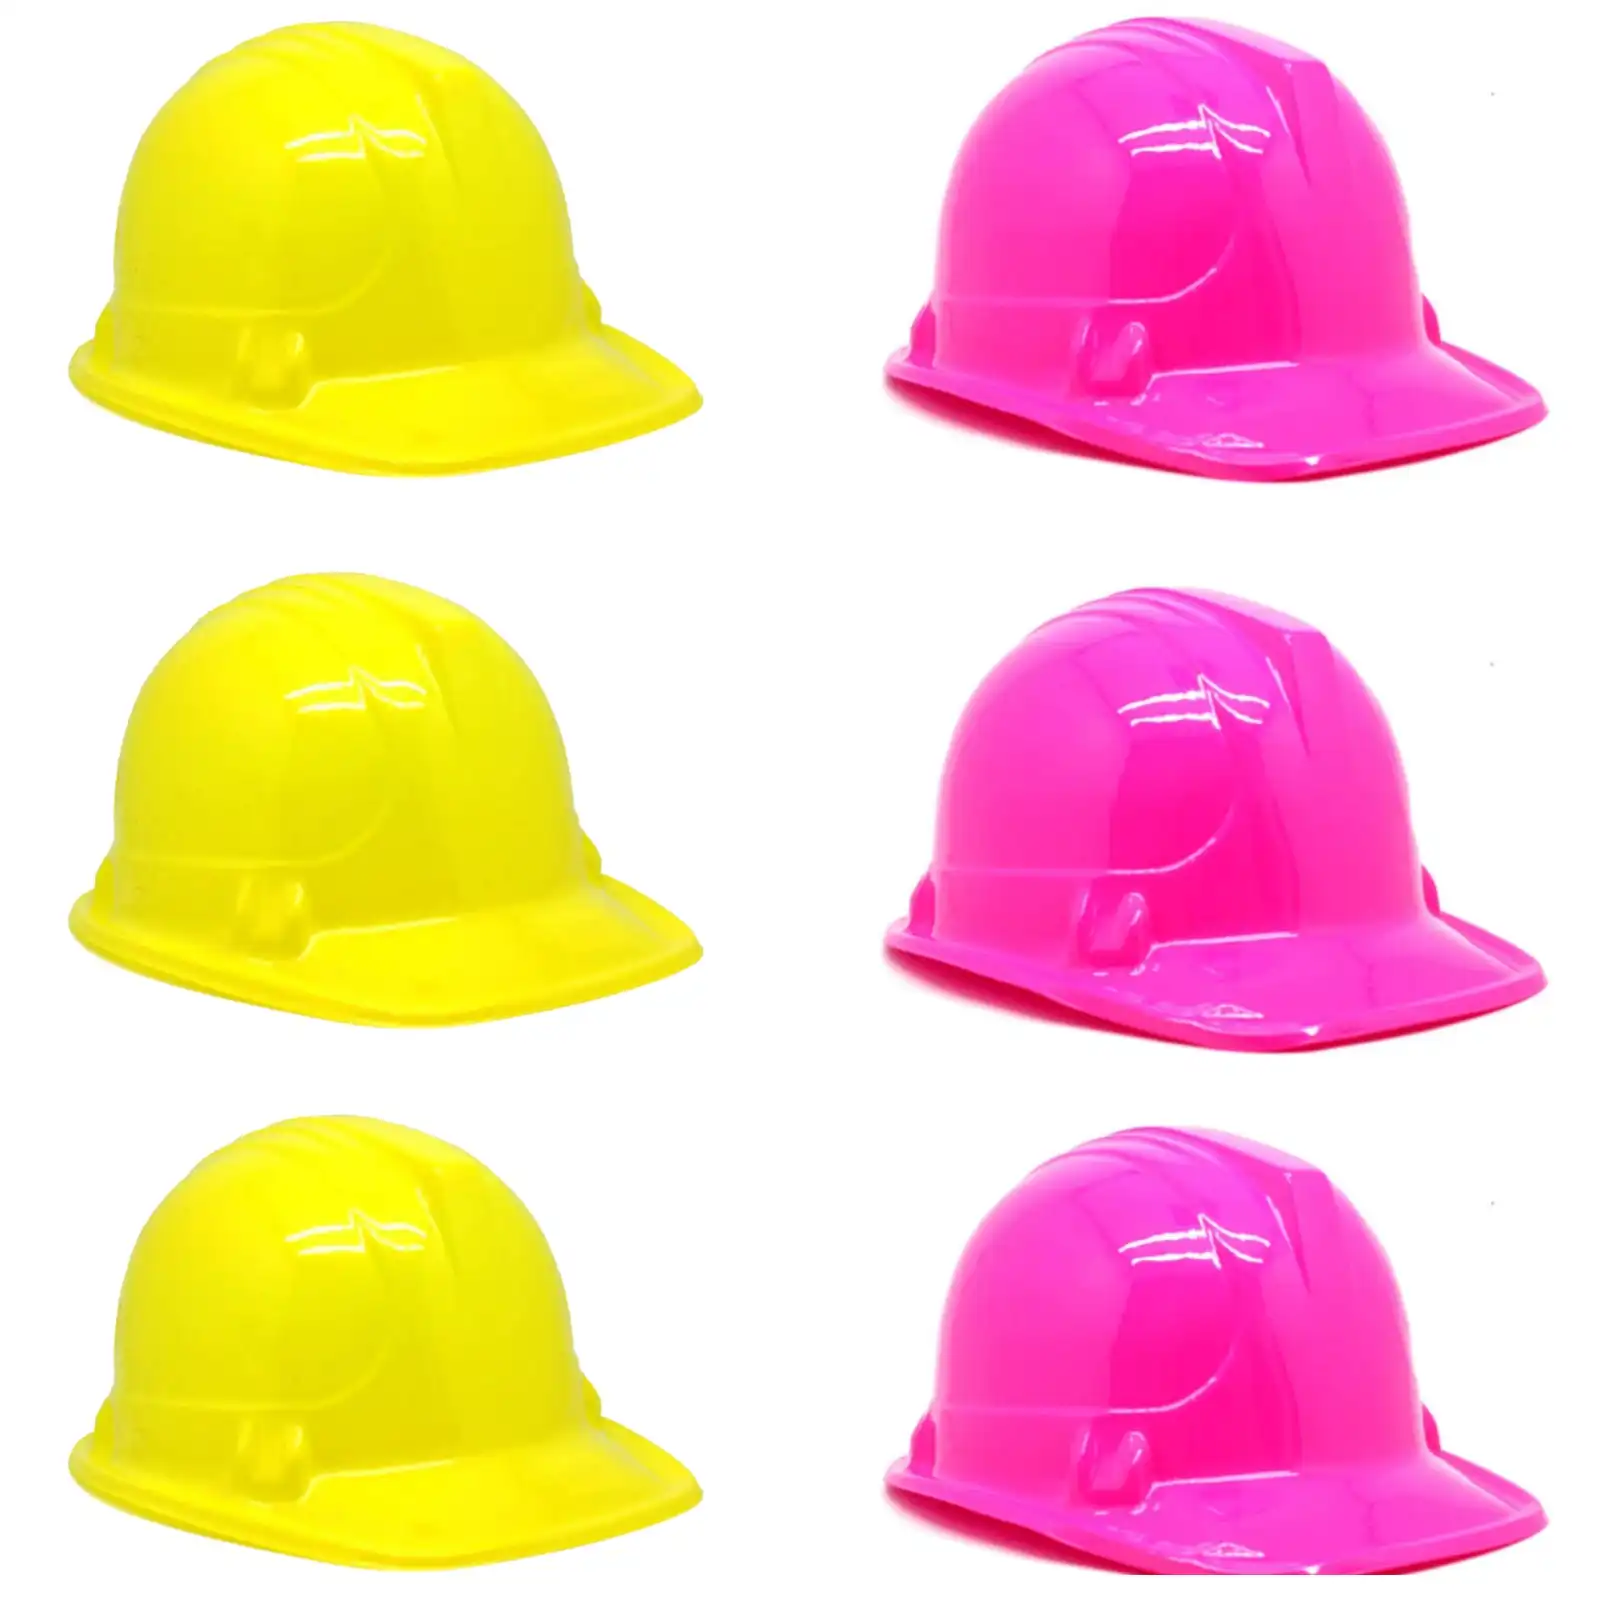 6x KIDS BUILDER HATS Construction Costume Party Helmet Safety Cap Childrens